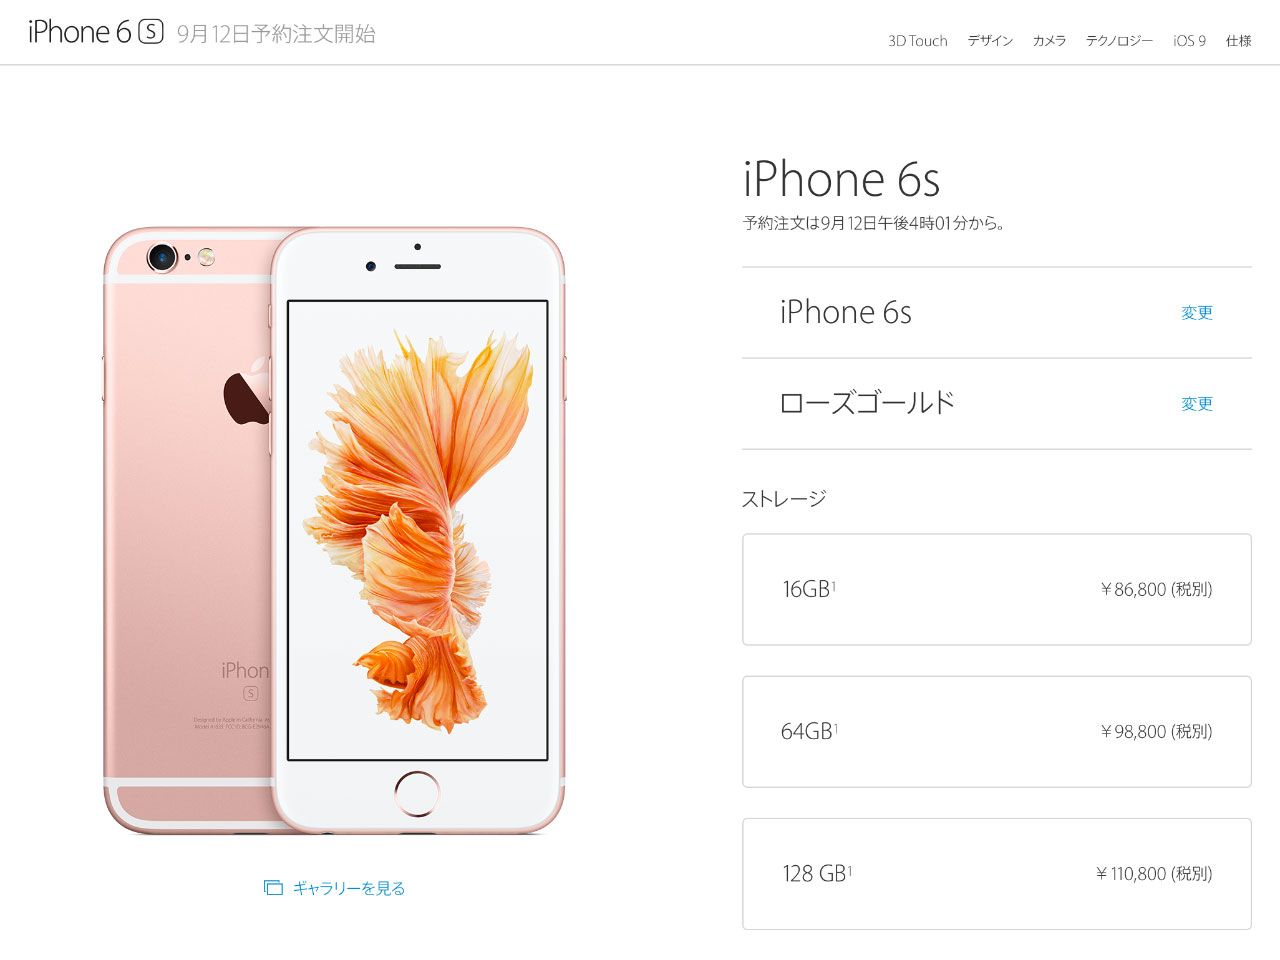 SIMフリー版「iPhone 6s／iPhone 6s Plus」は8万6800円から 従来モデル 